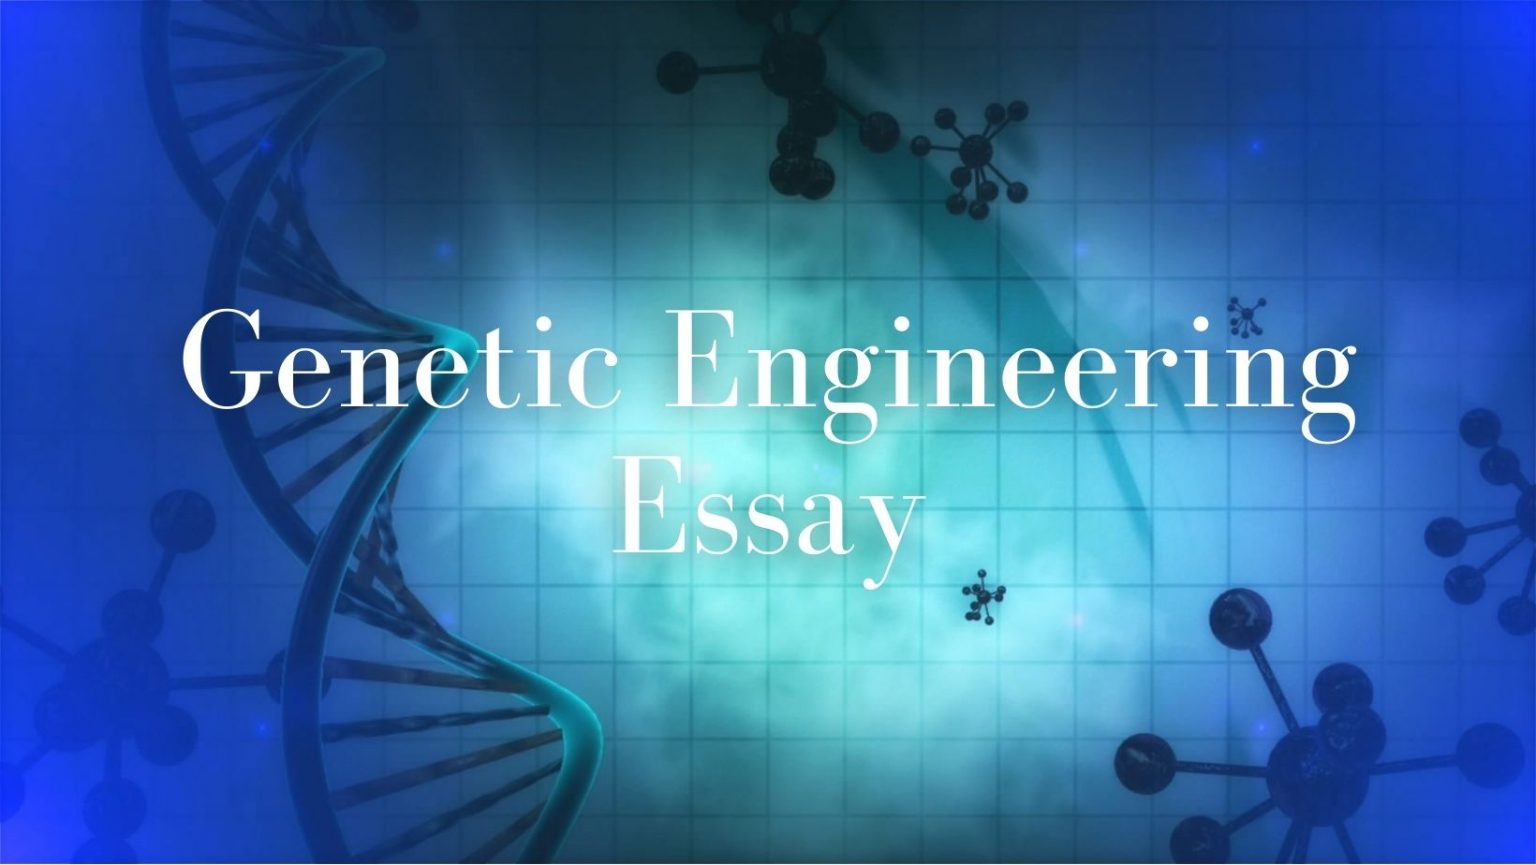 essay on genetic technology